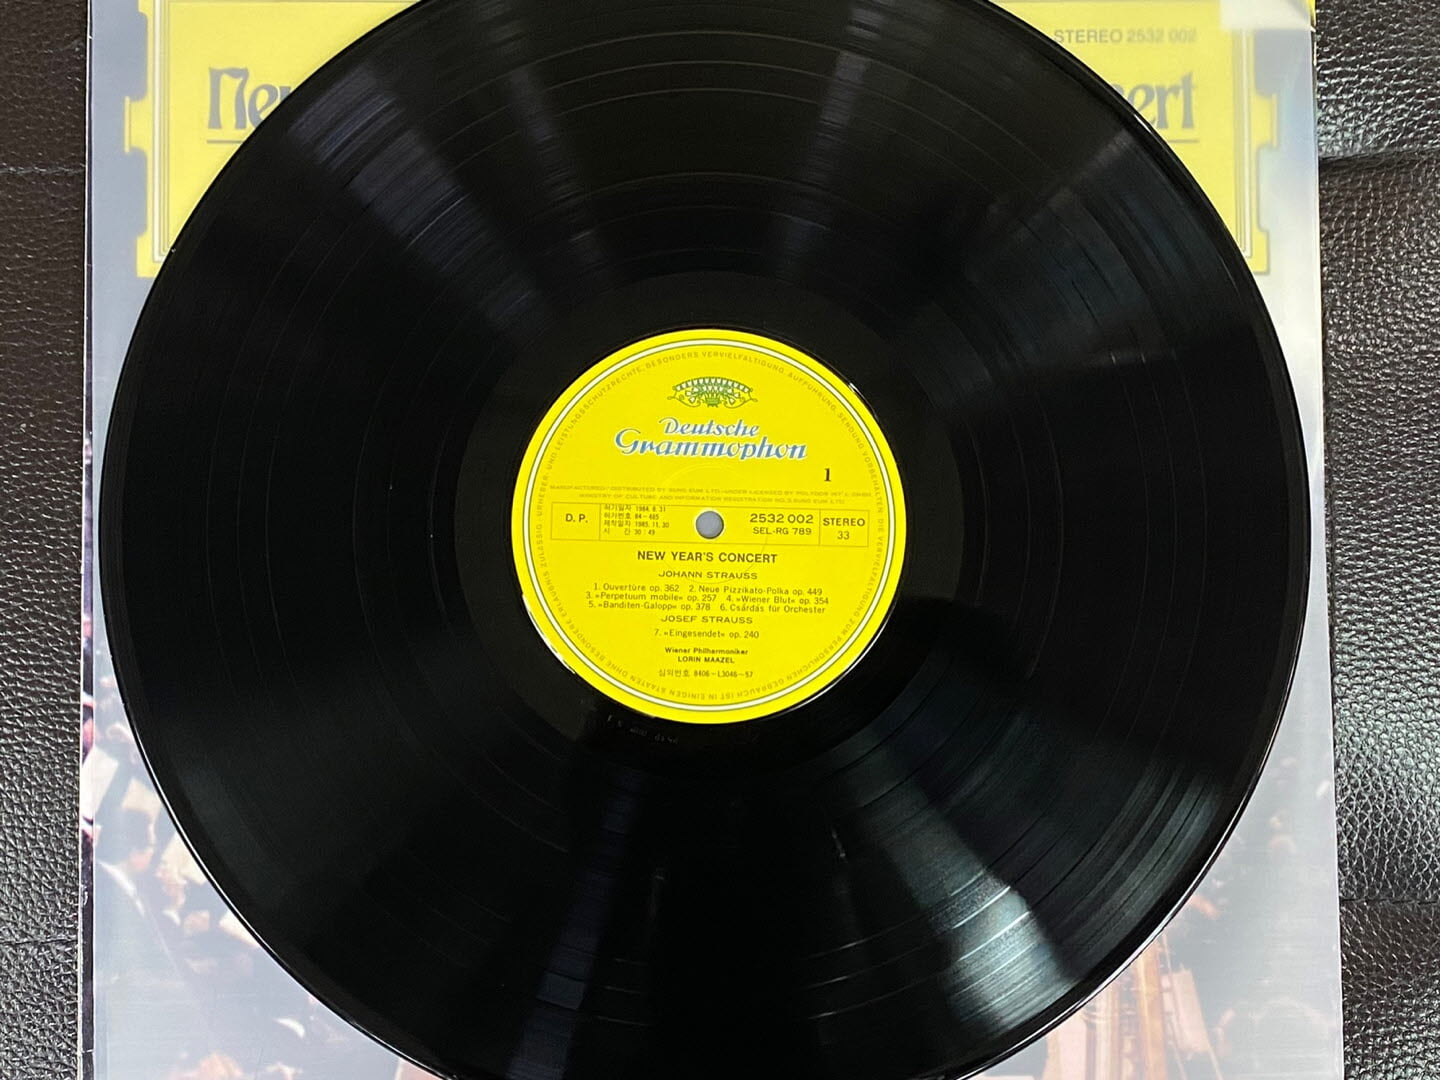 [LP] 로린 마젤 - Lorin Maazel - 1980 New Year's Concert LP [성음-라이센스반]